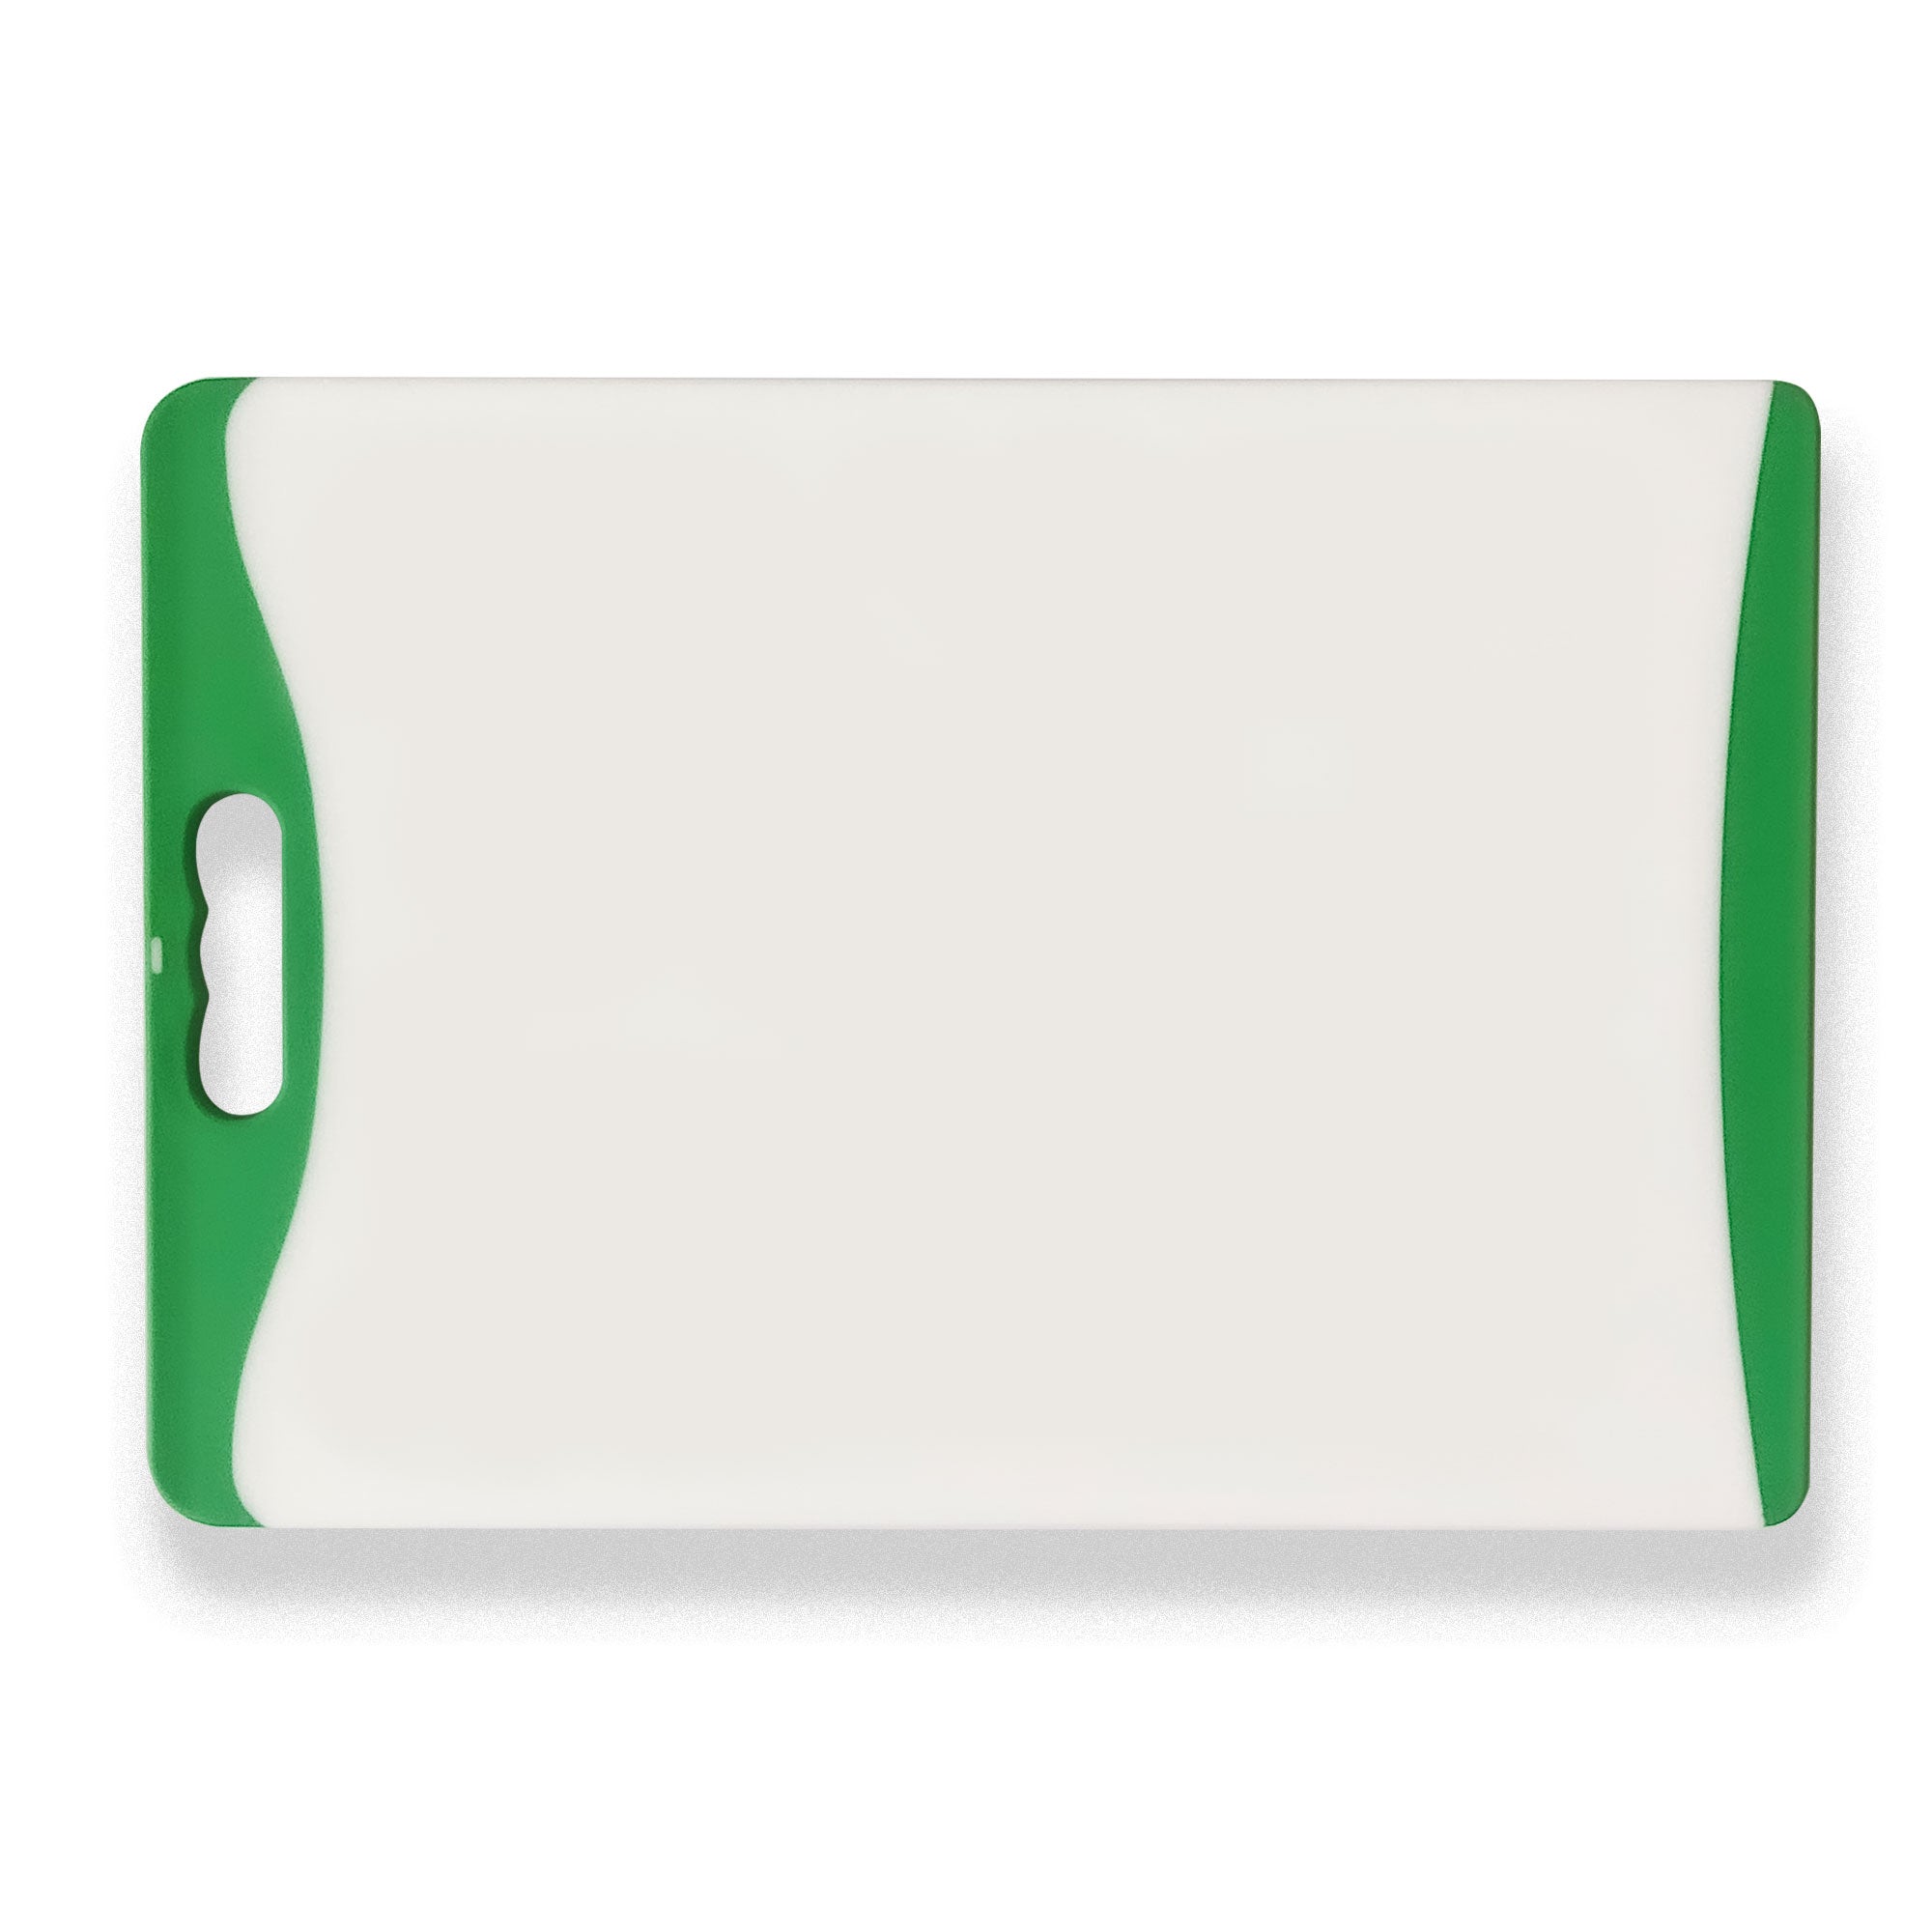 Preserve® Small Plastic Cutting Board in Apple Green, Small - Harris Teeter